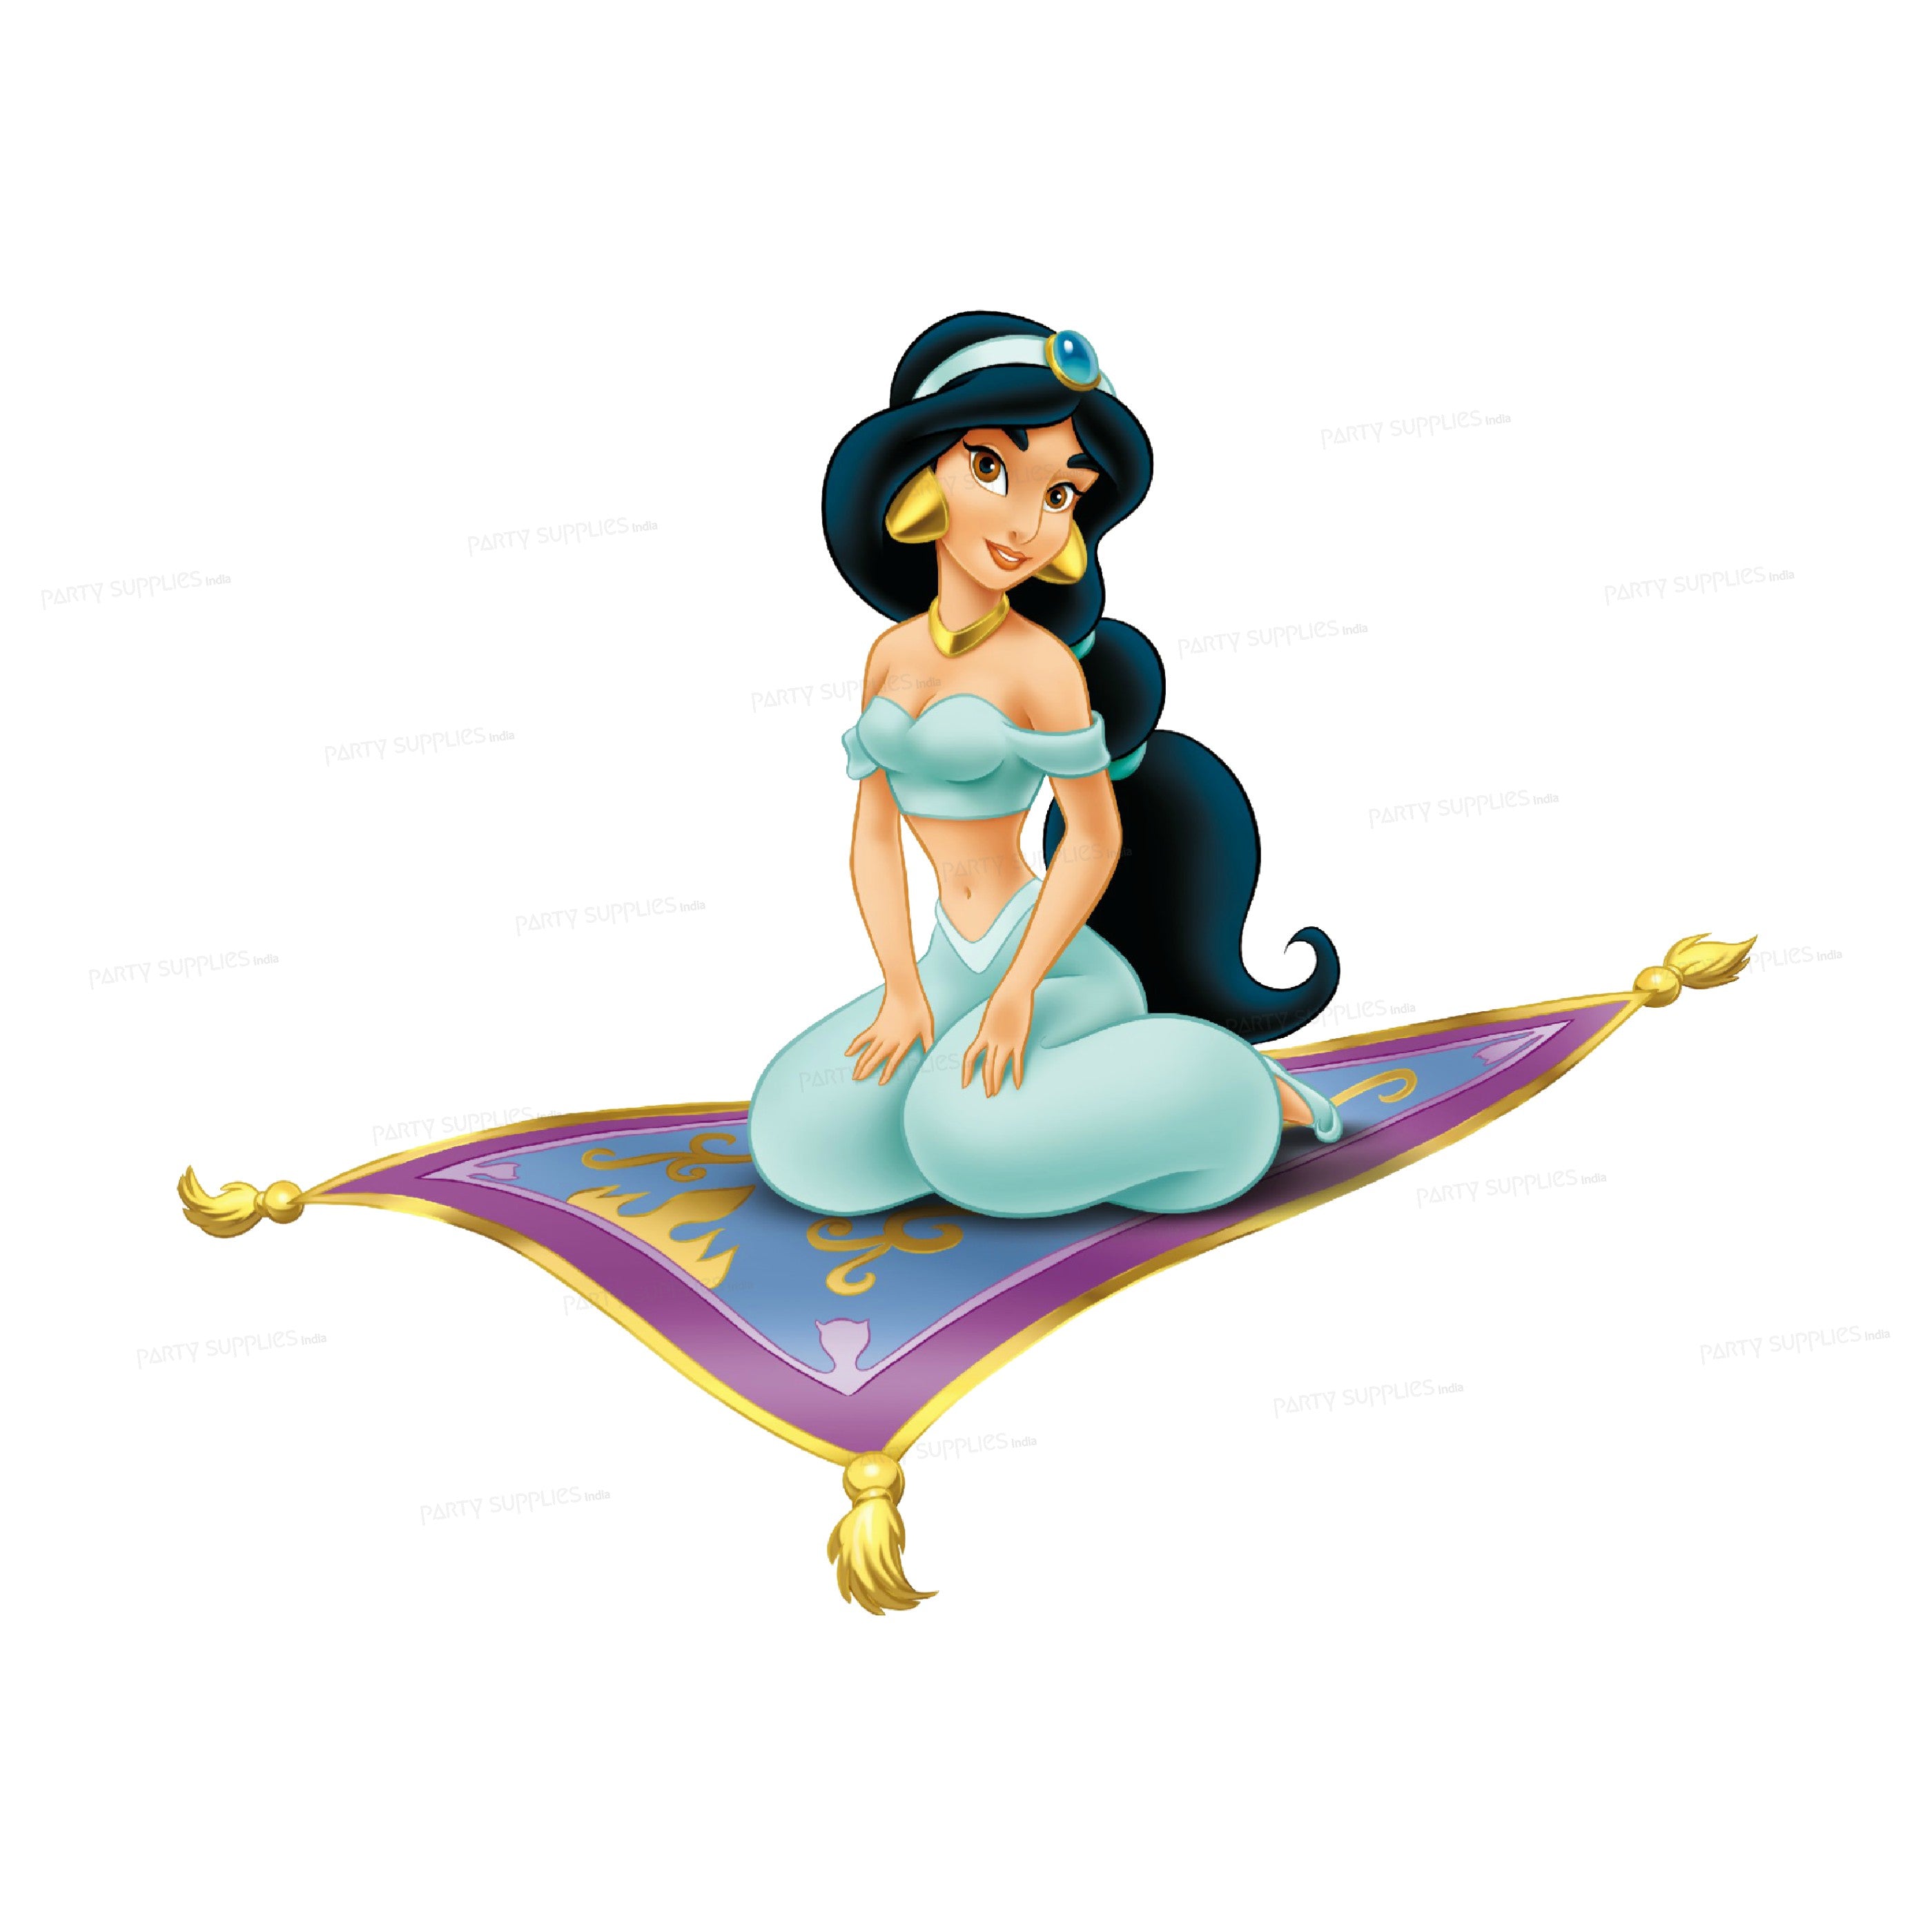 PSI Aladdin Theme Cutout - 09